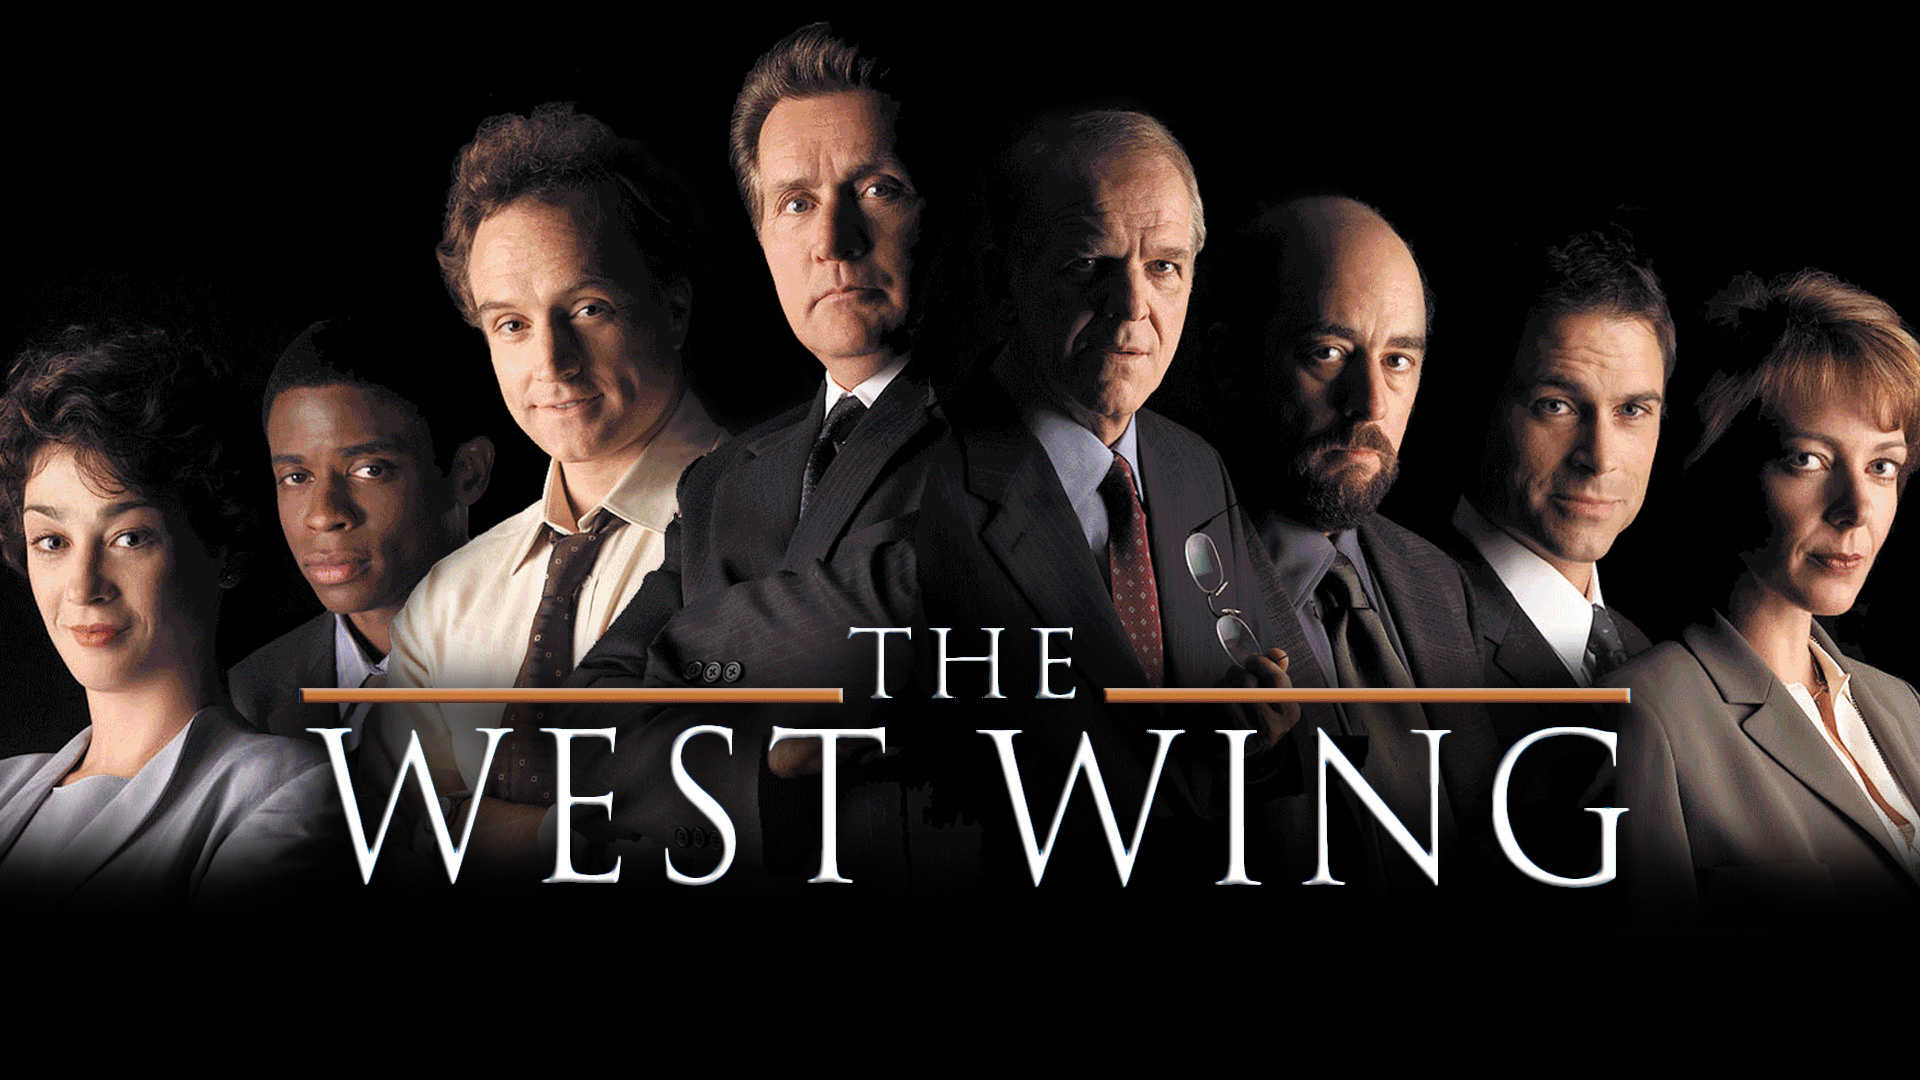 The West Wing (TV Series): An NBC original TV drama, Golden Globe award-winning show. 1920x1080 Full HD Wallpaper.